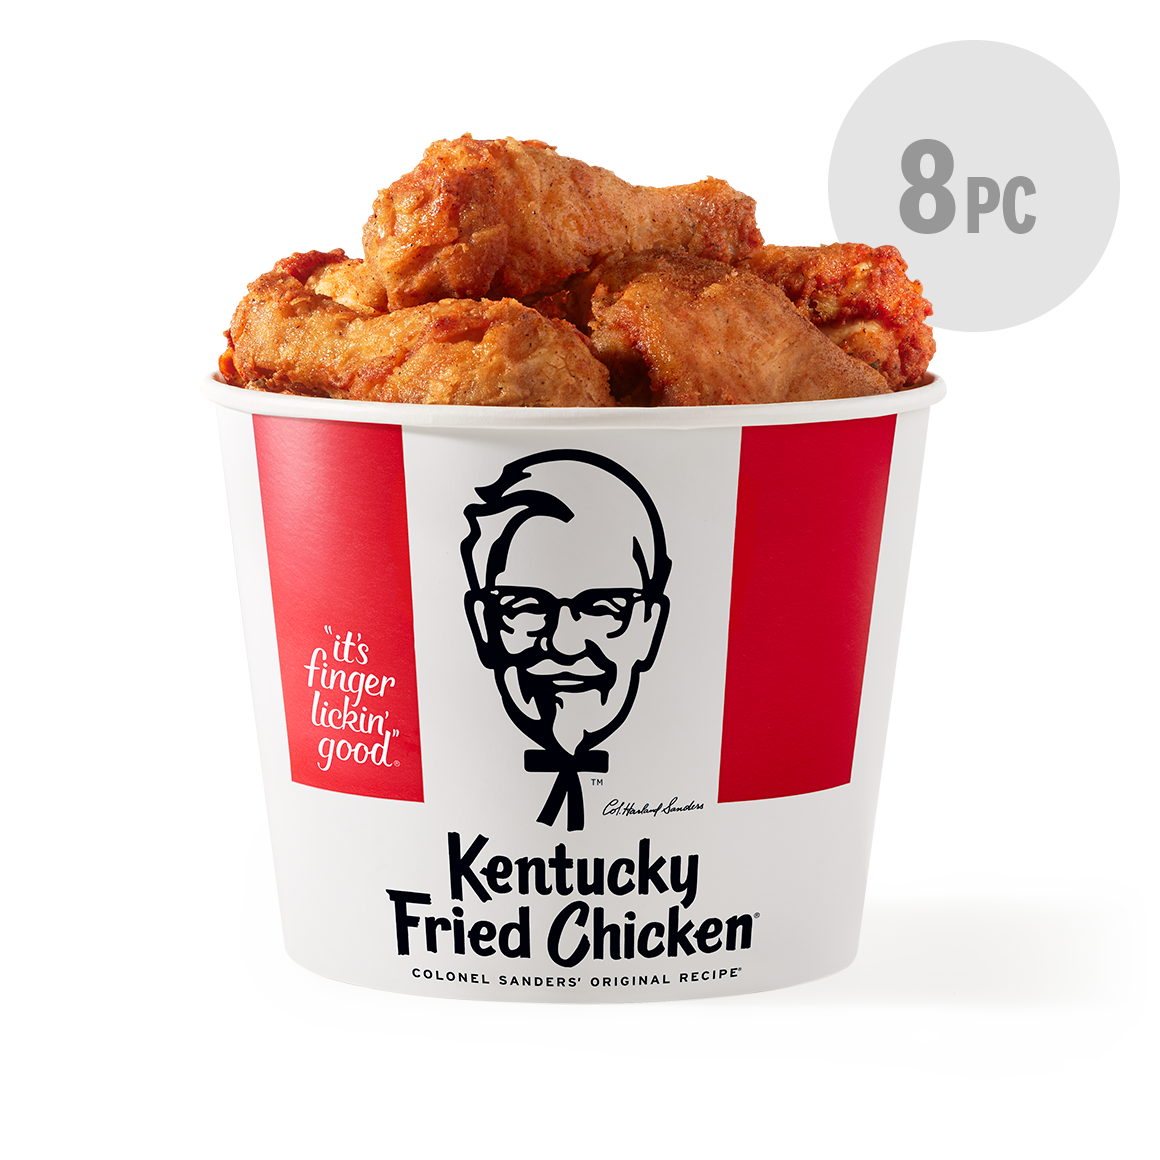 KFC 8 piece bucket special on Tuesdays - $10